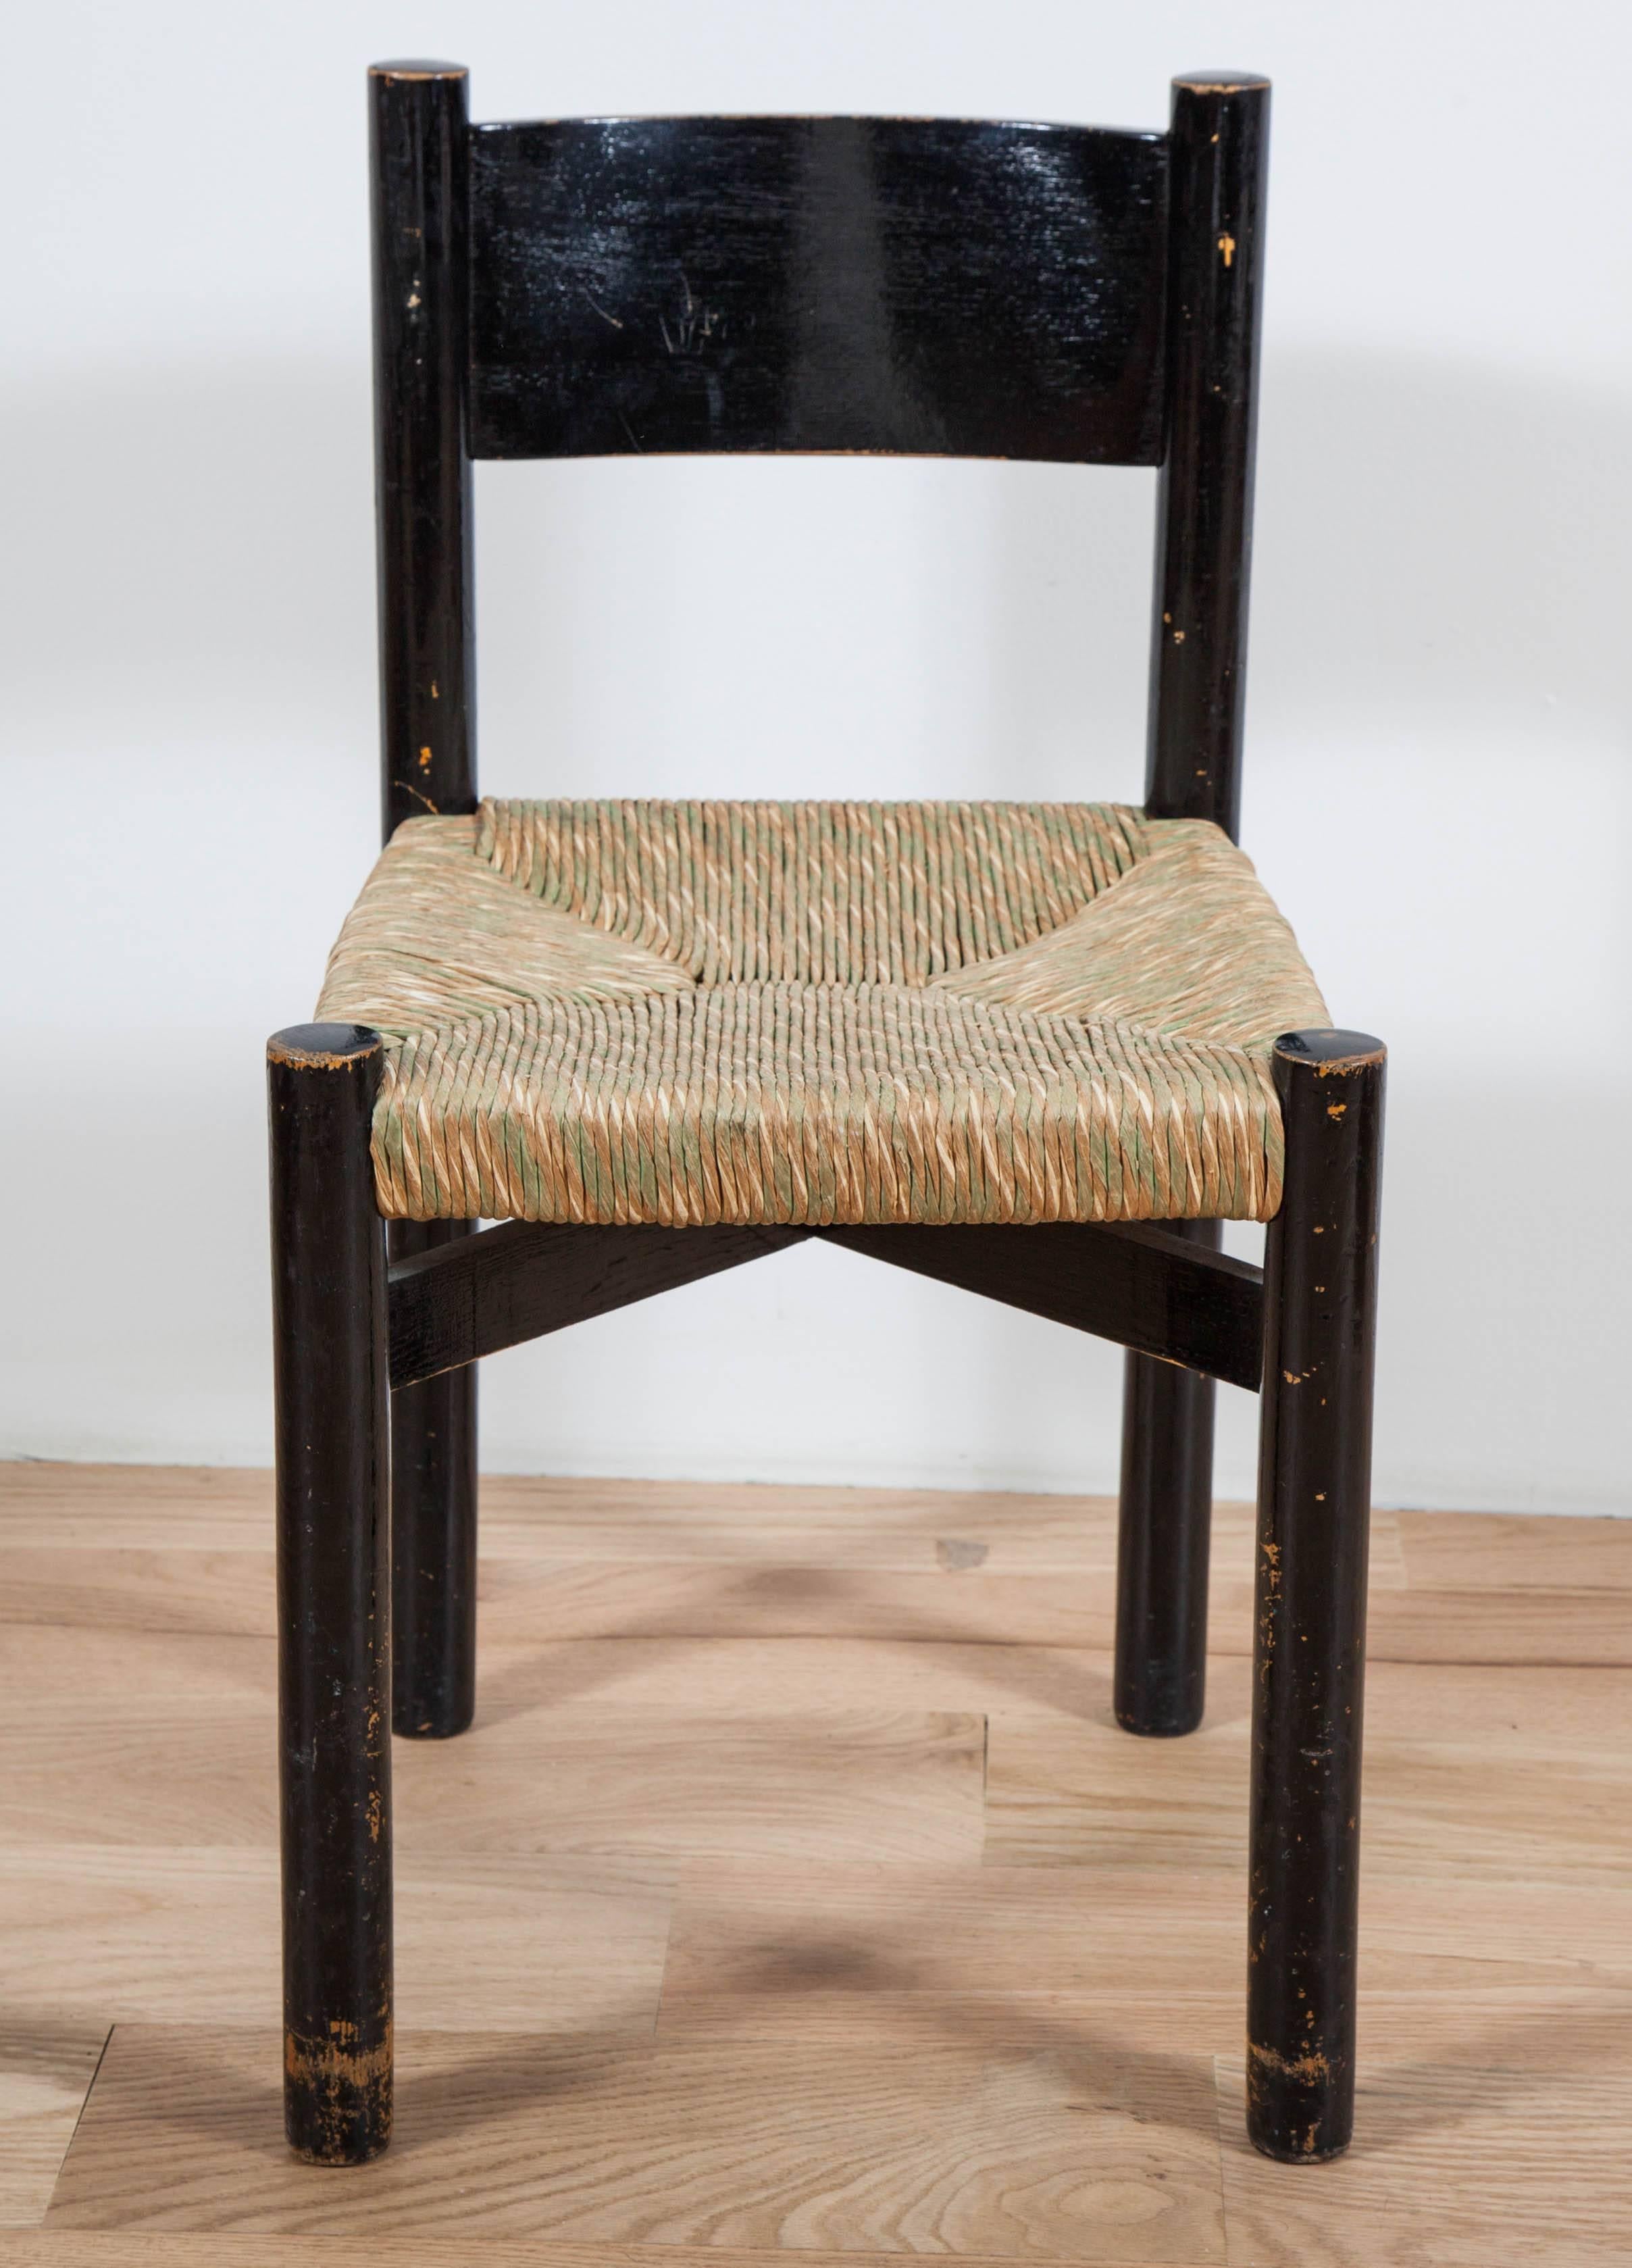 Charlotte Perriand, circa 1950.
Chair in black enameled wood, rush seat.